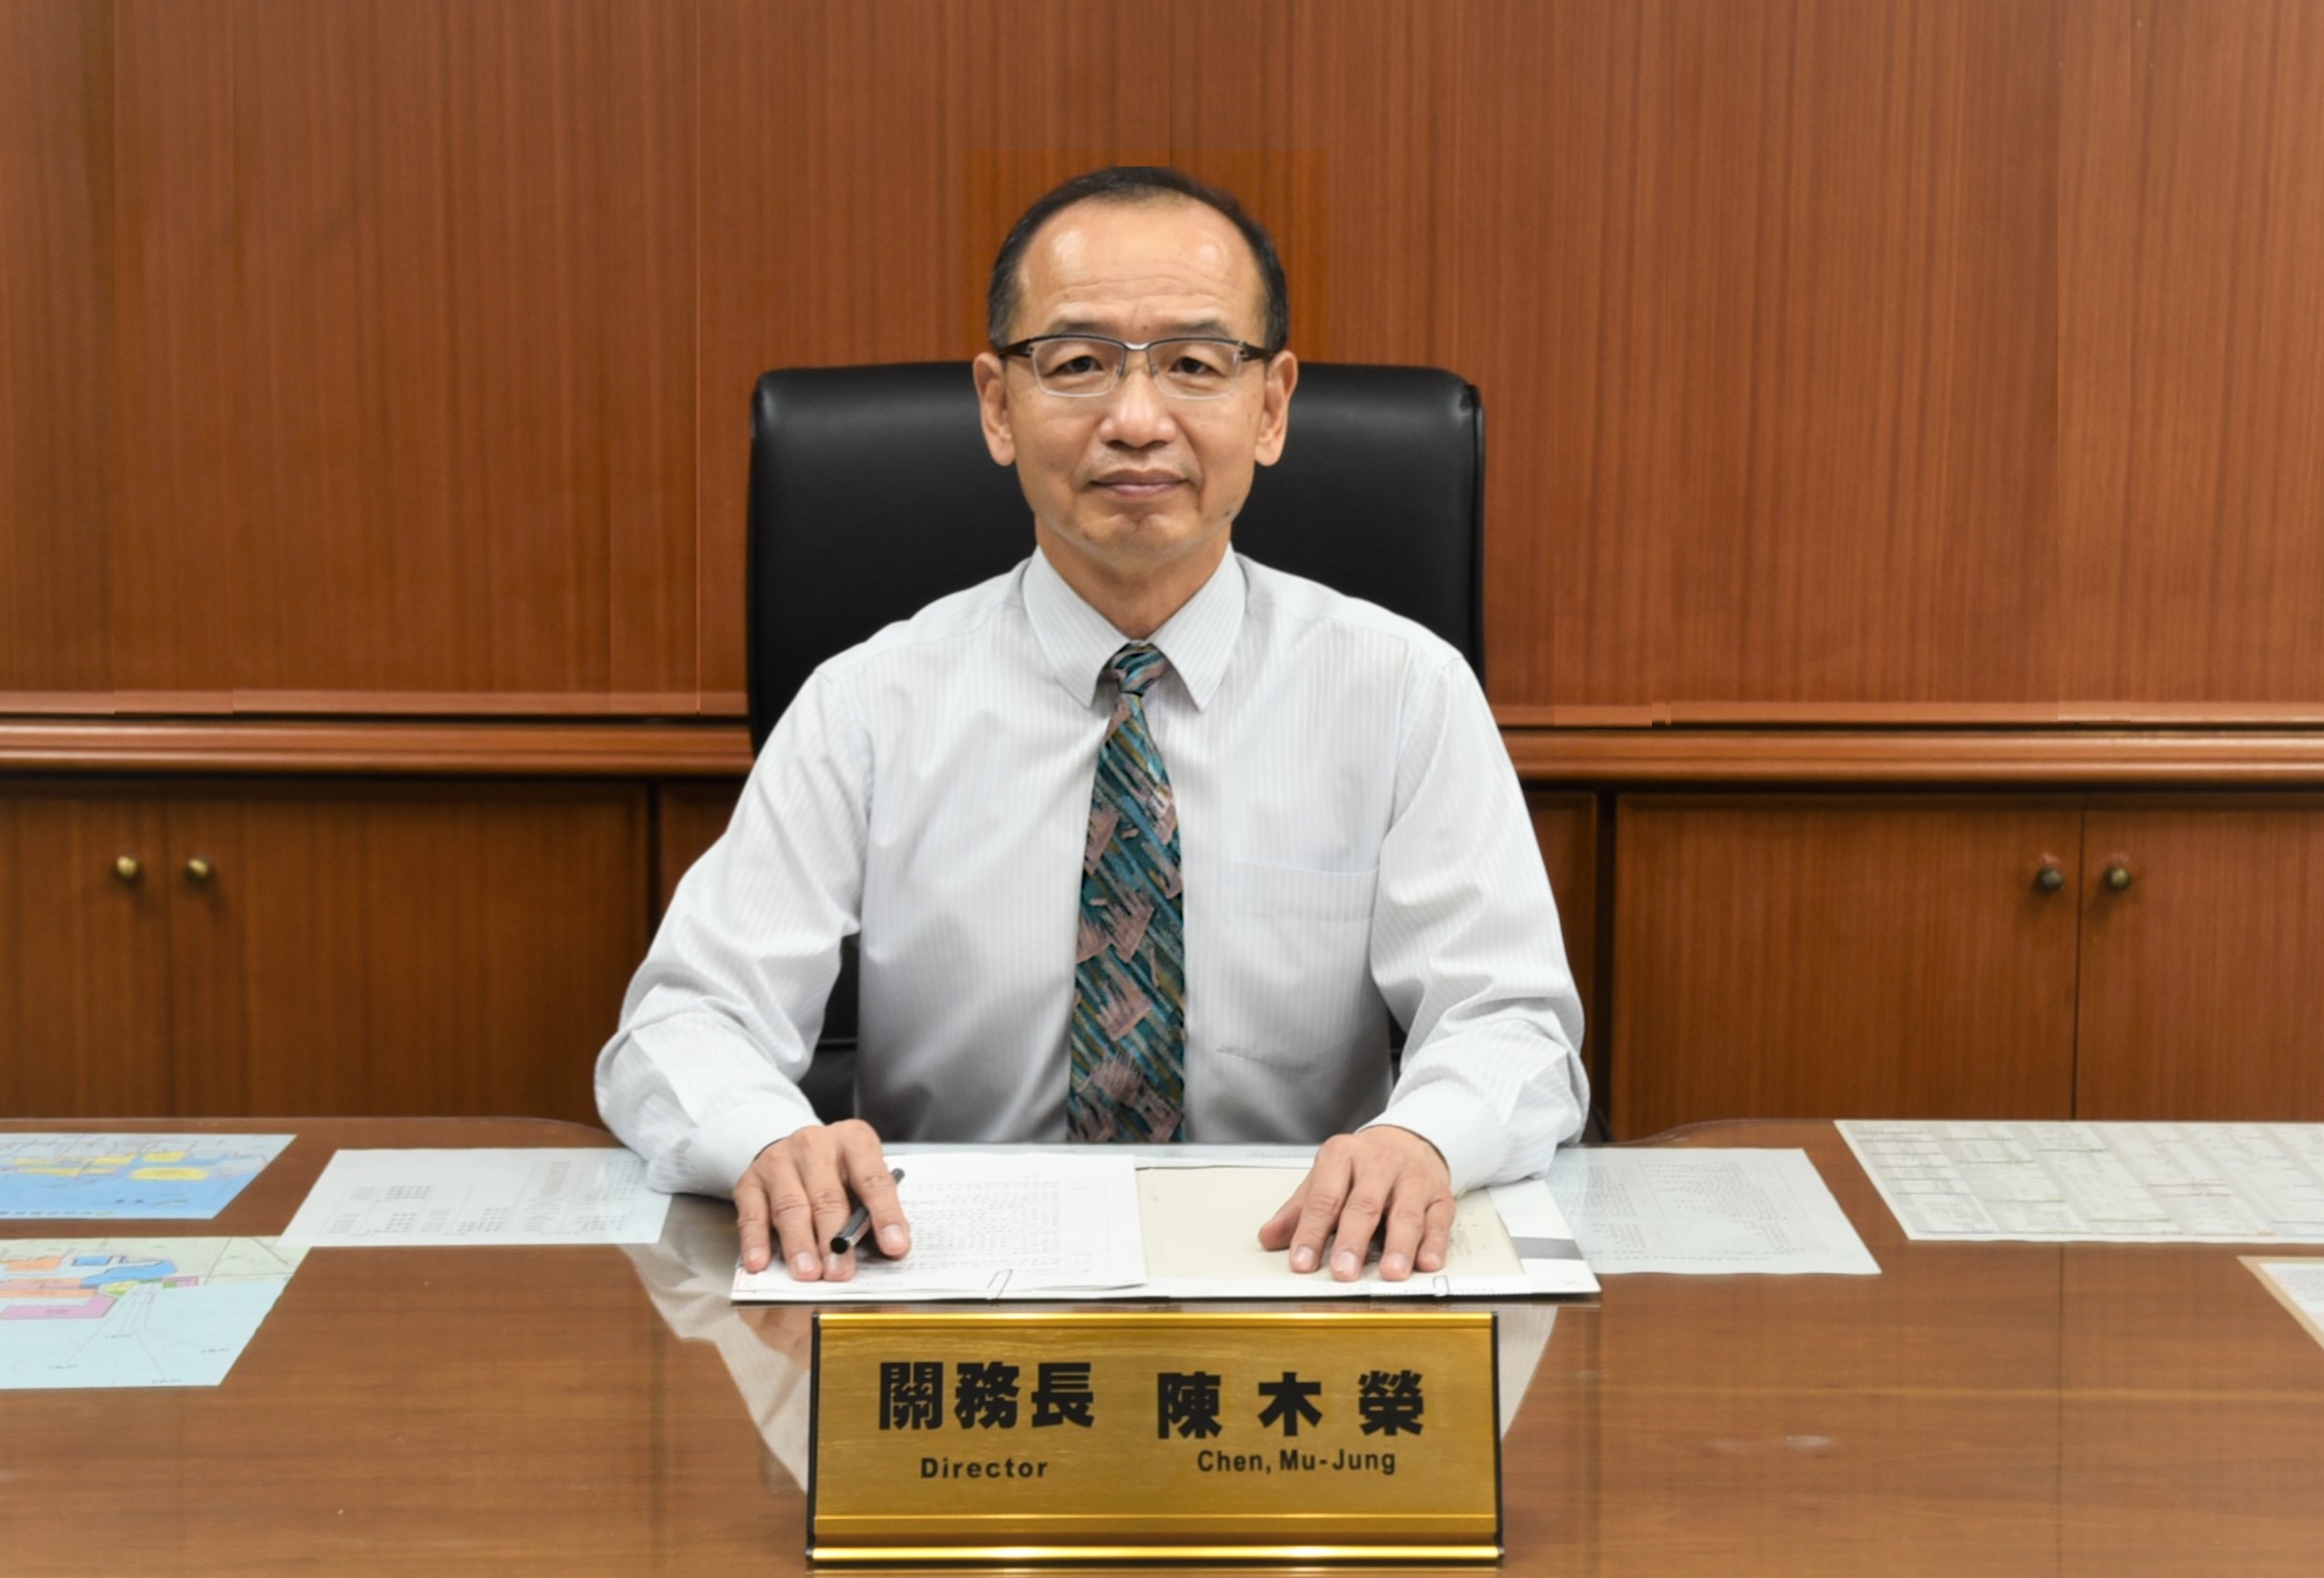 Director of Kaohsiung Customs: Chen, Mu-Jung